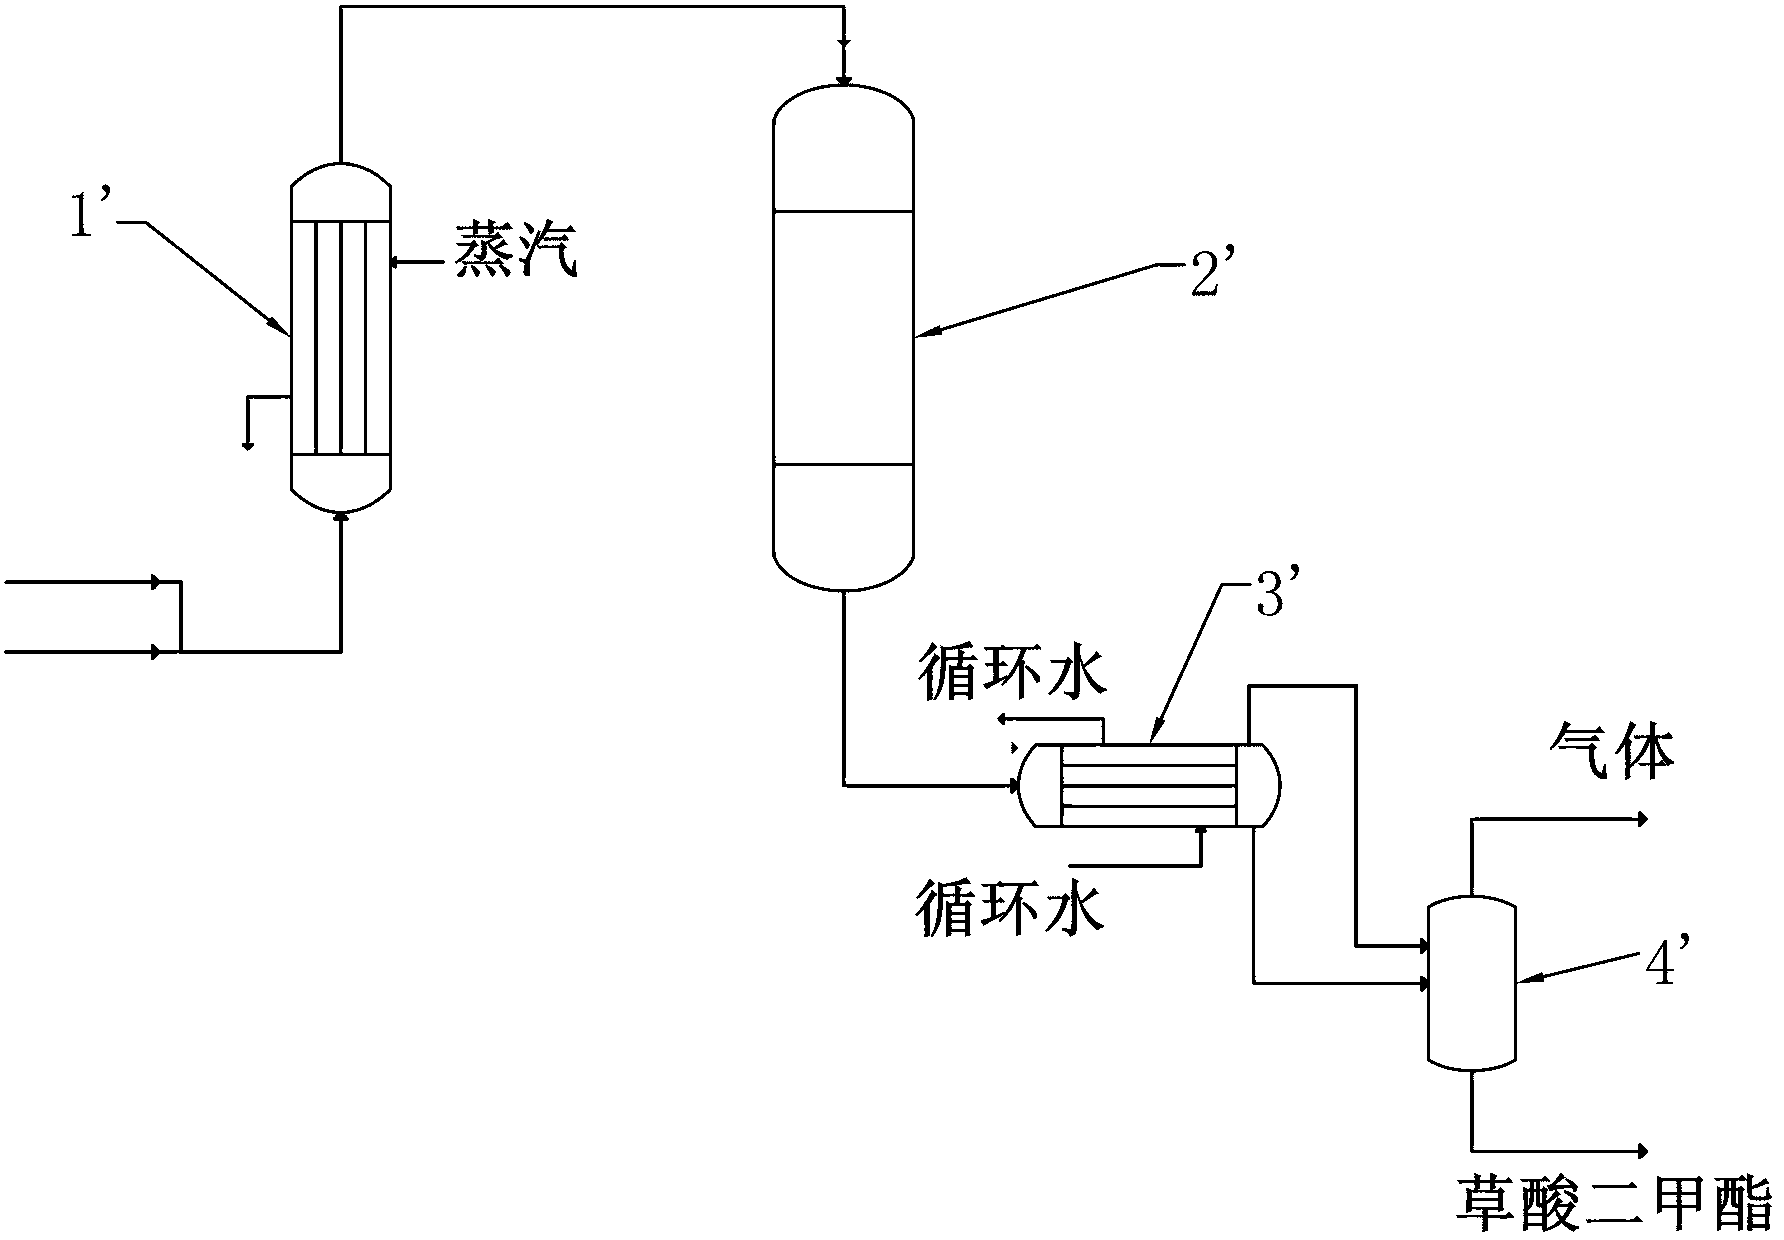 Dimethyl oxalate production device